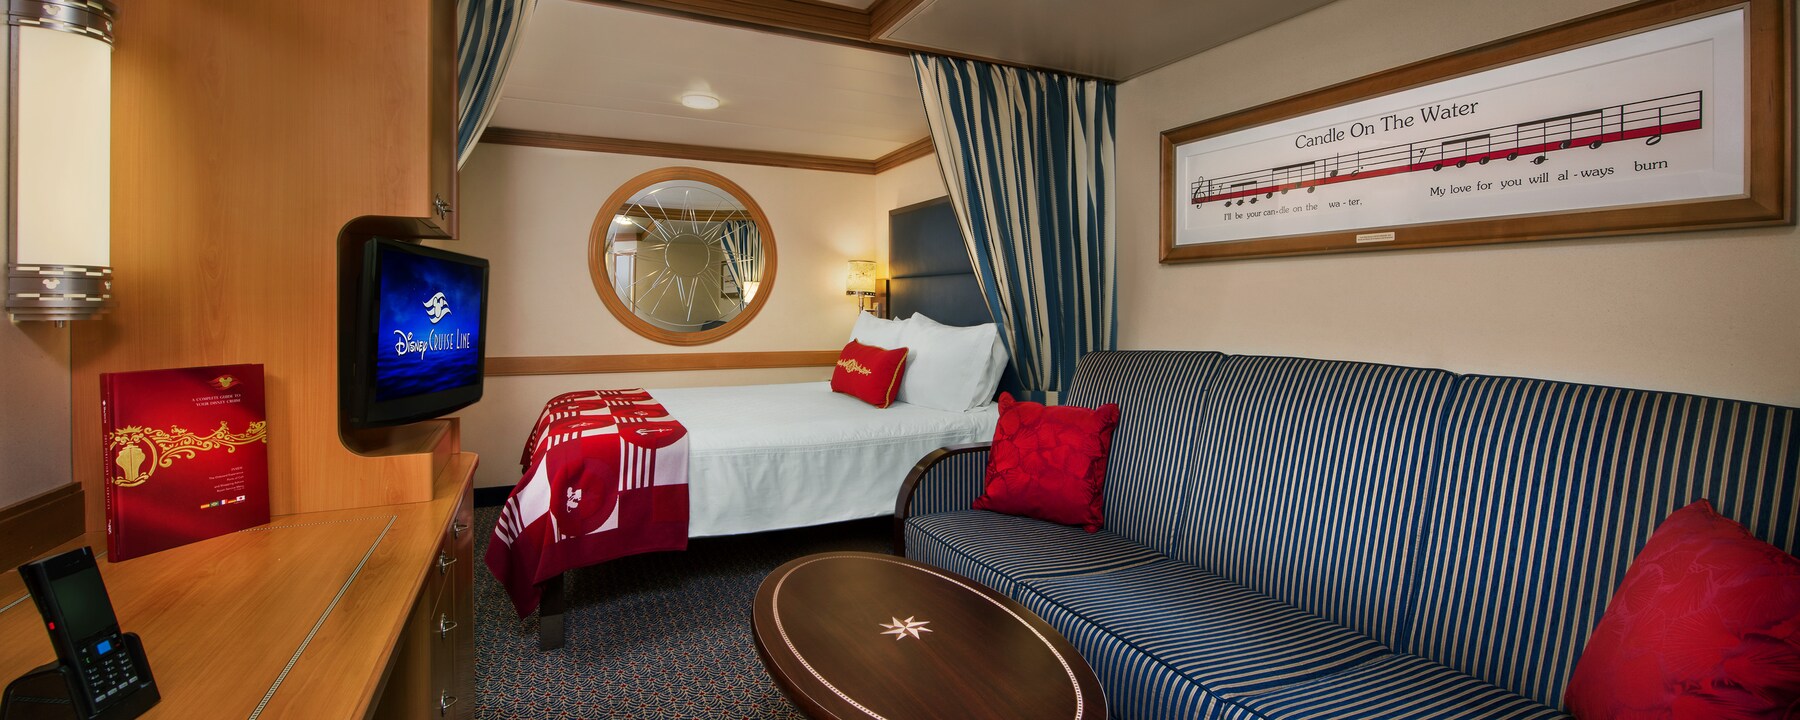 disney wonder cruise ship room layout